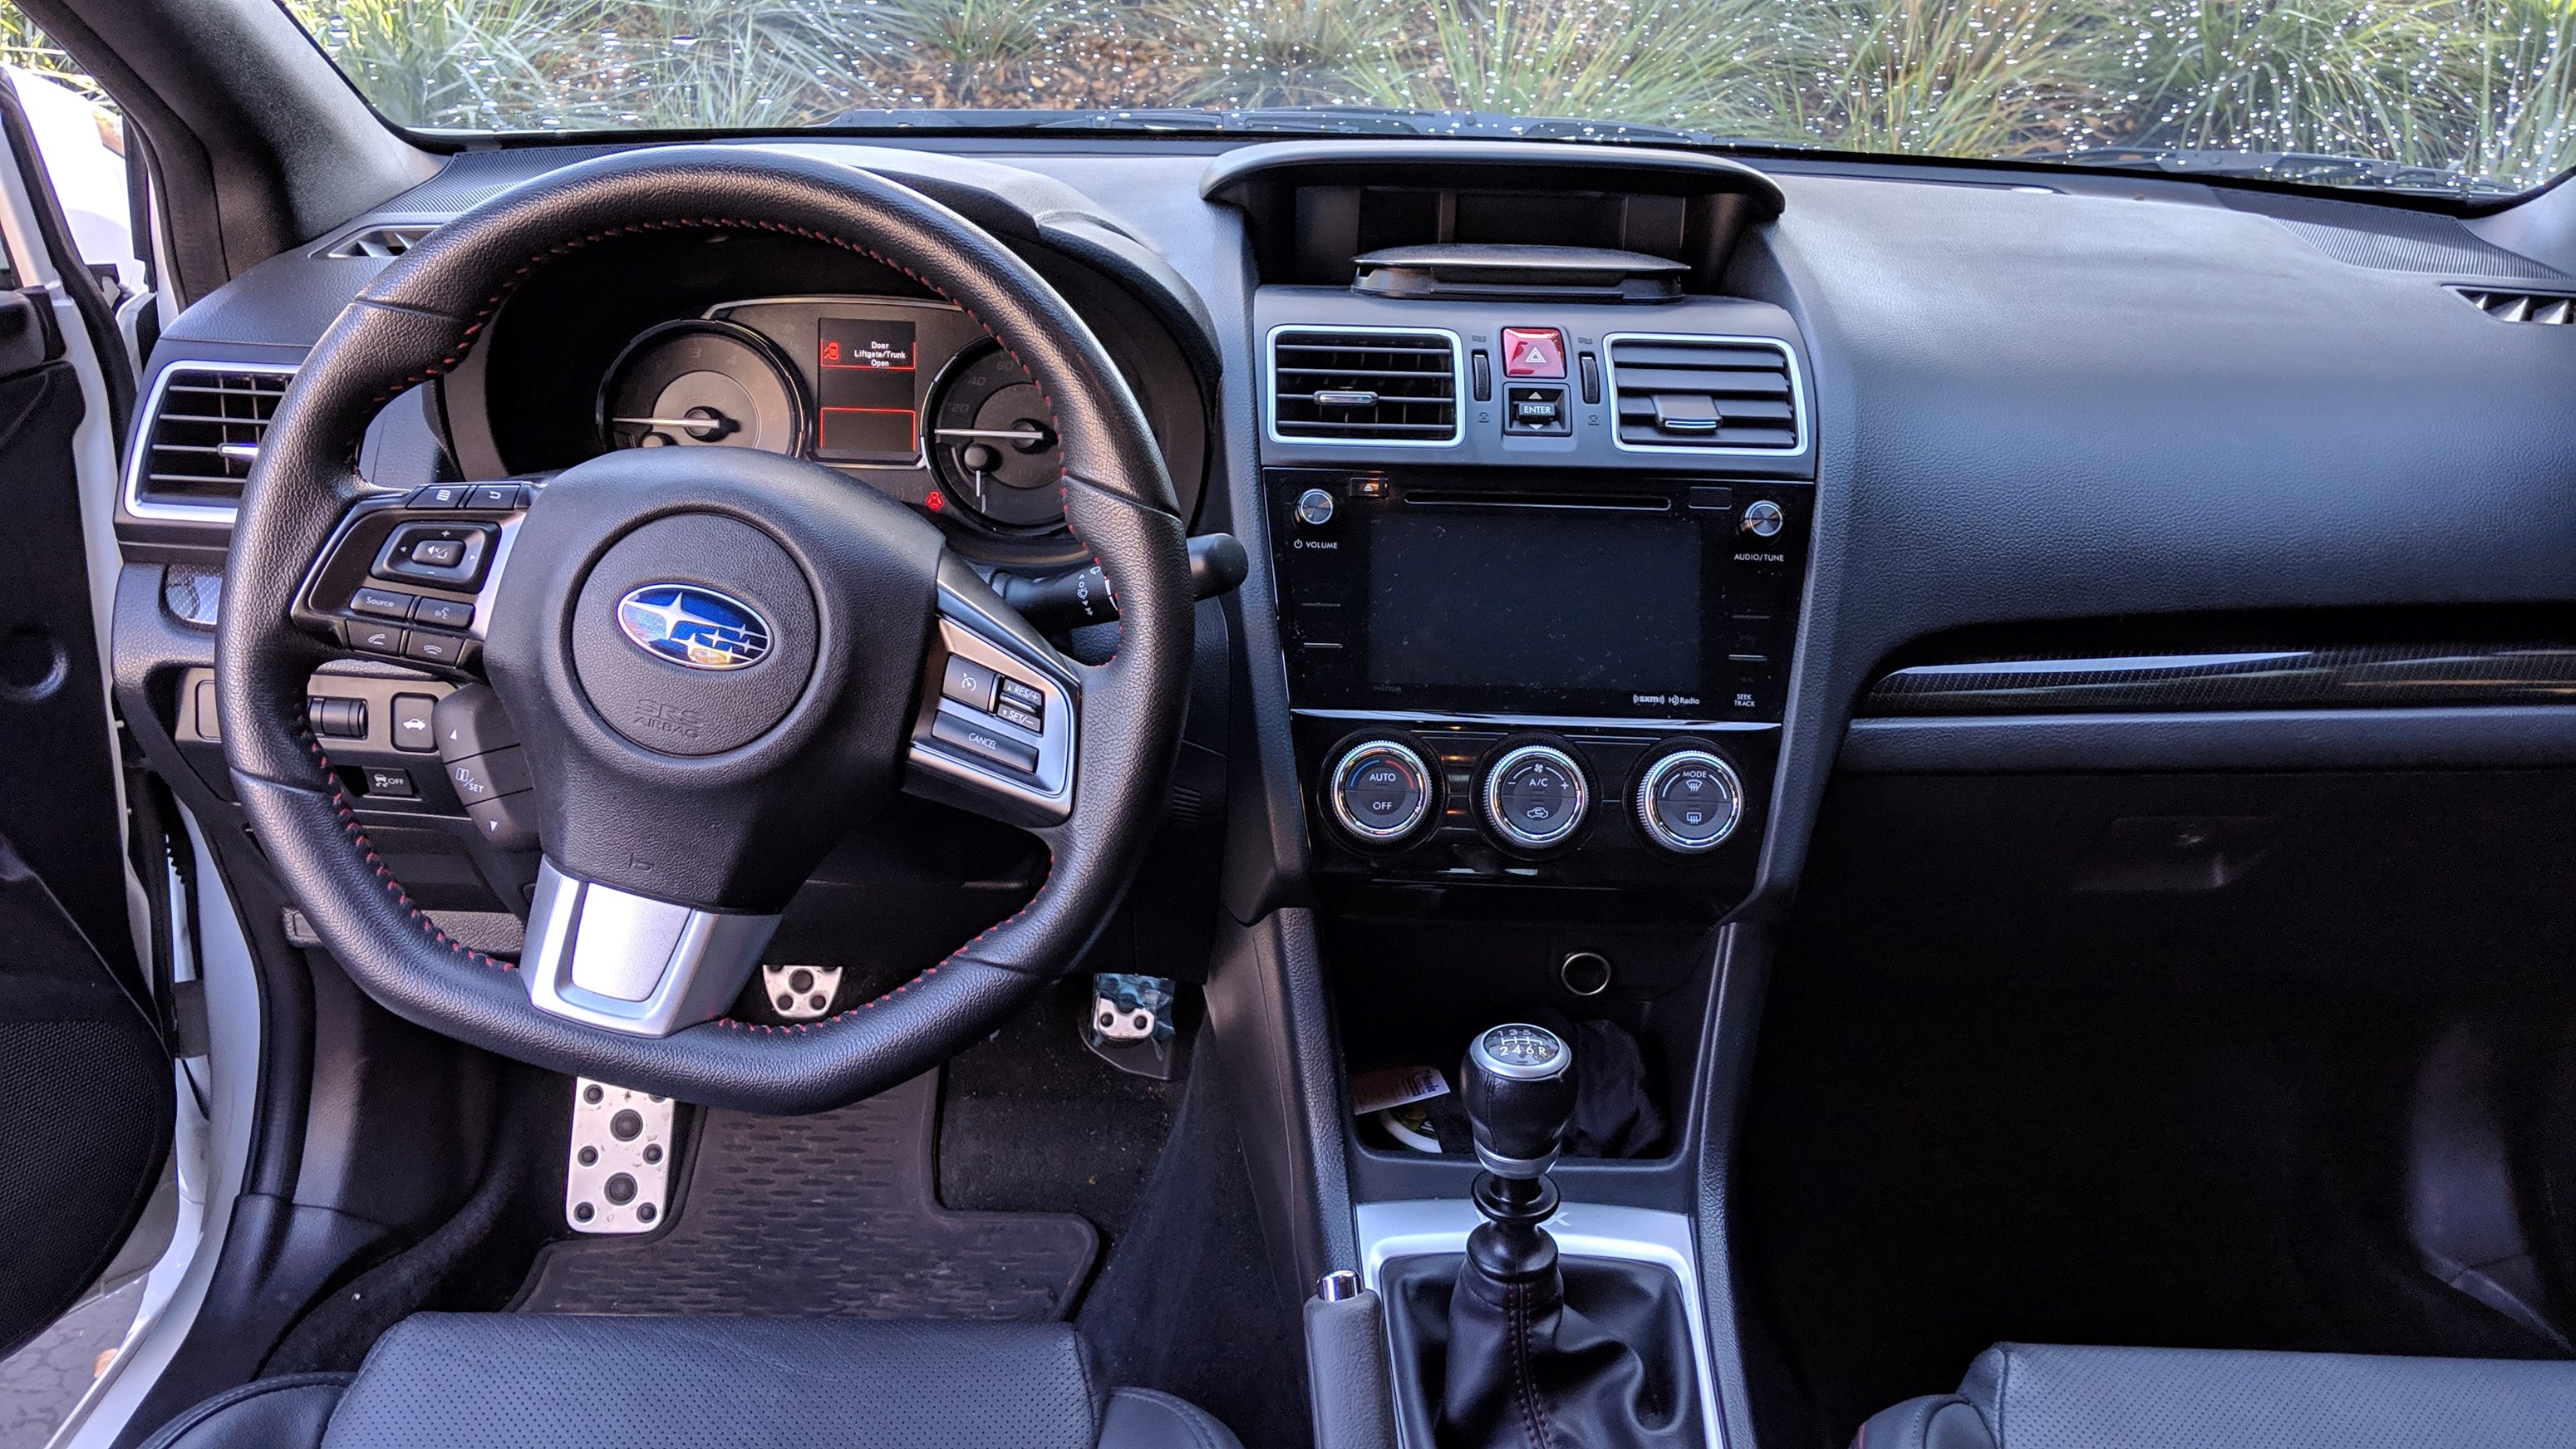 2017 subaru impreza manual transmission